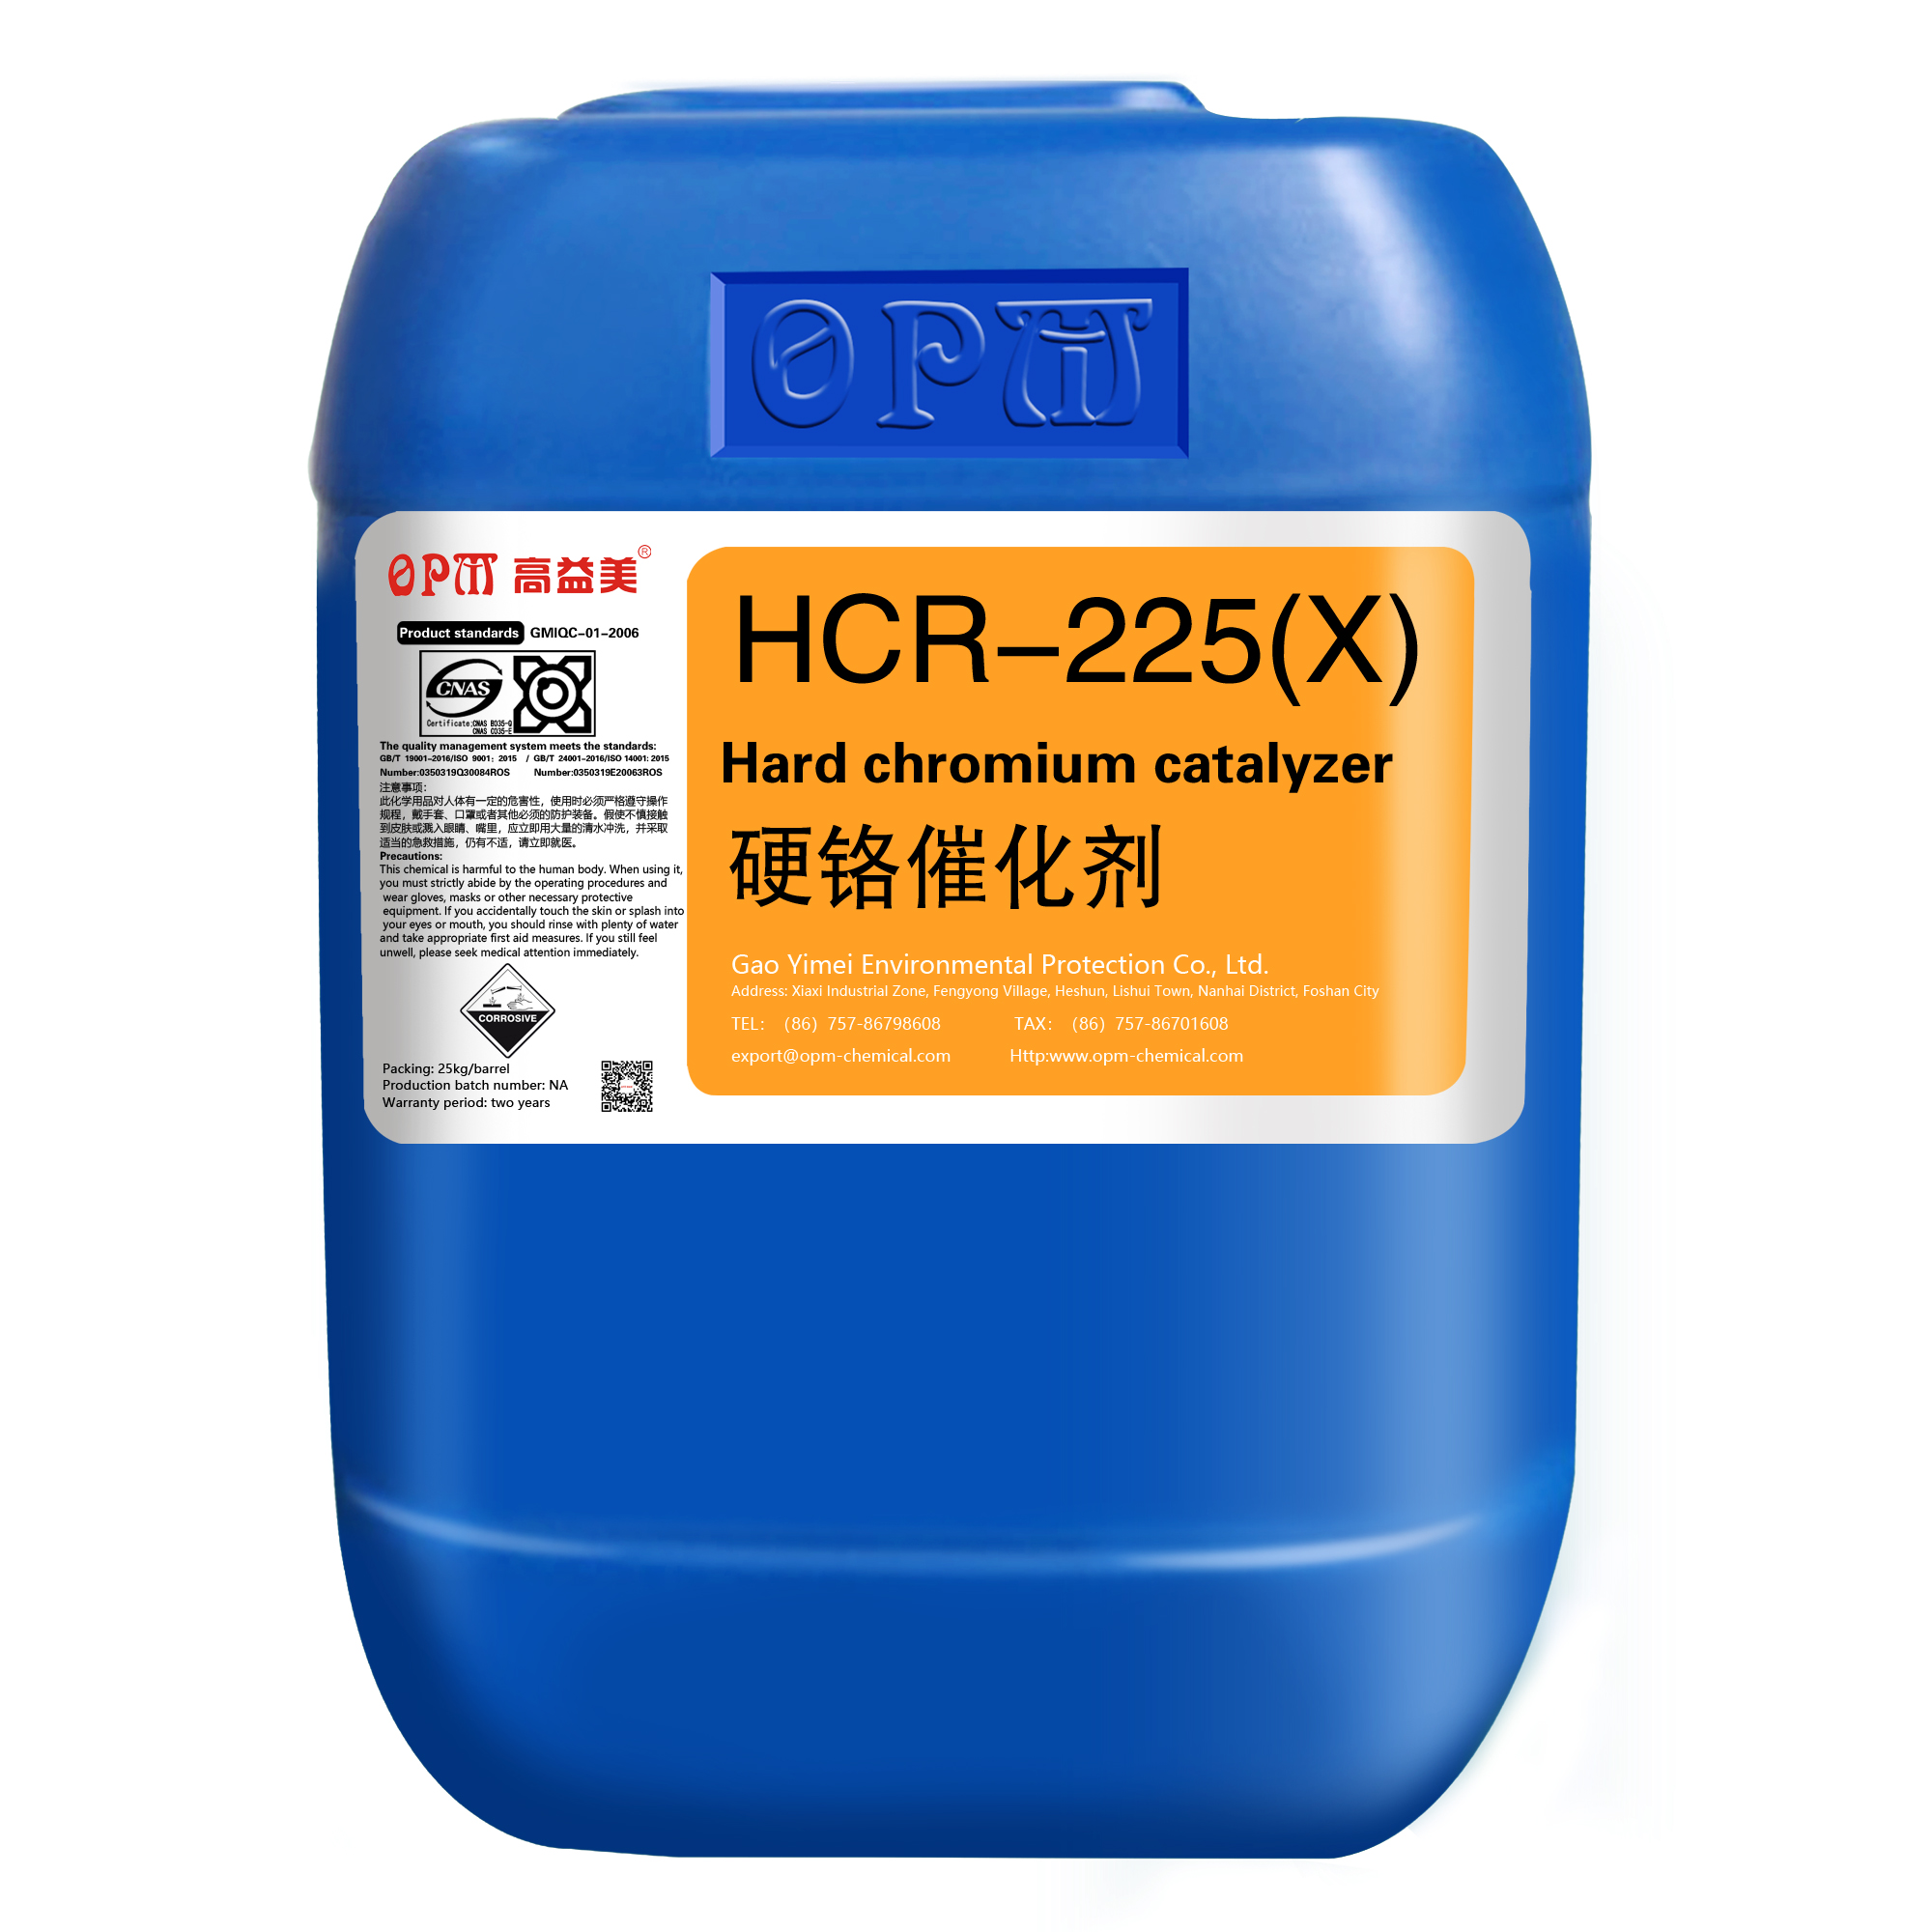 HCR-225 hard chromium catalyzer